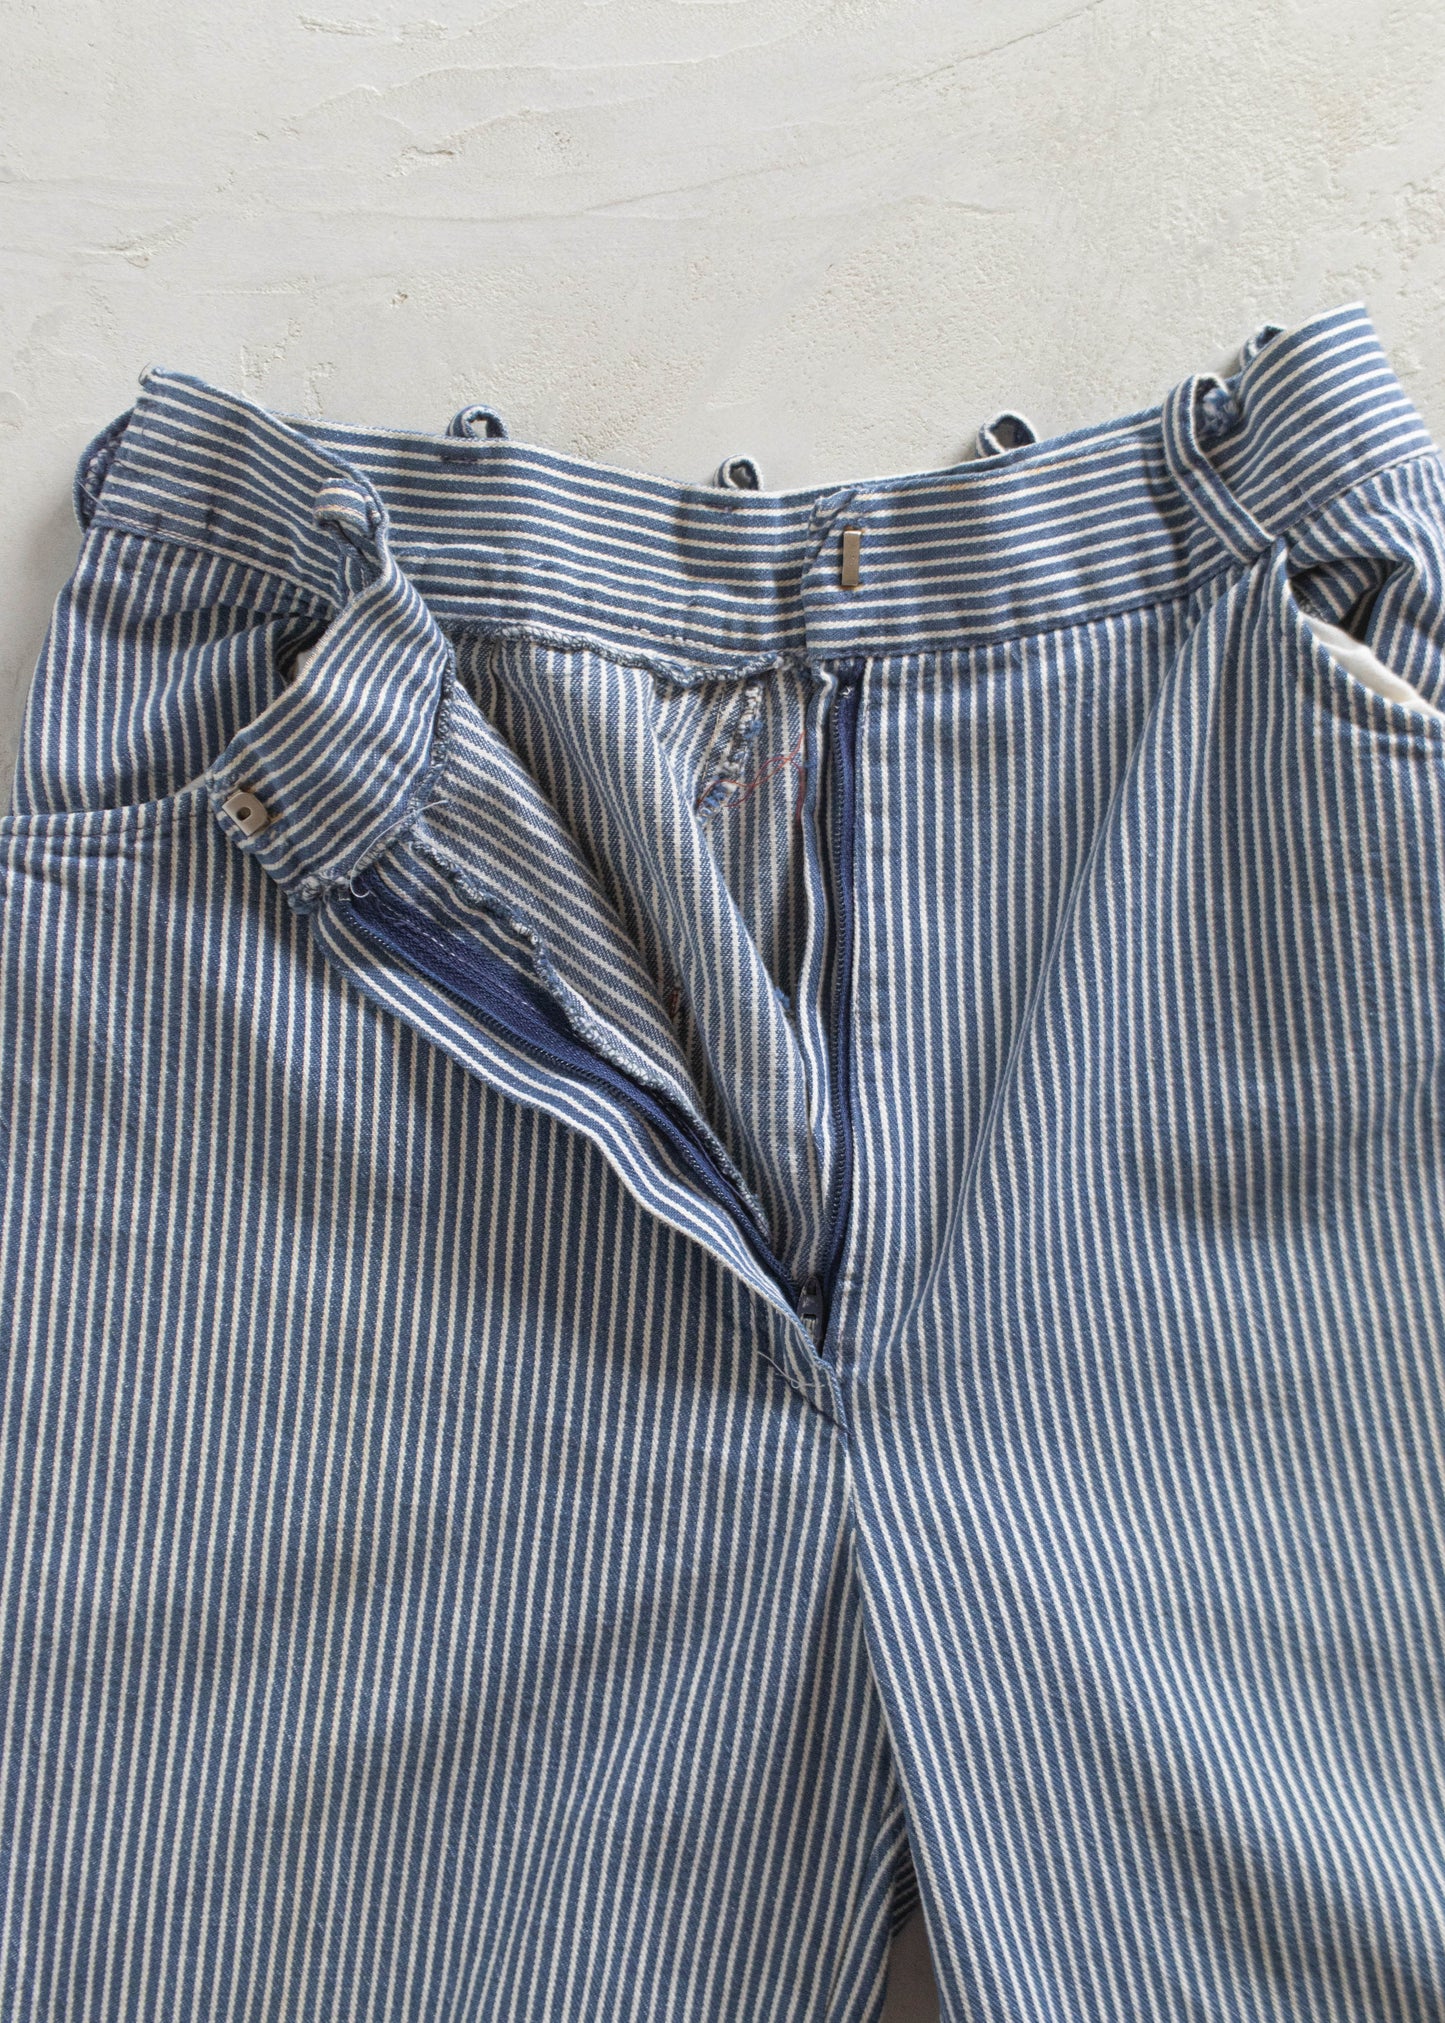 Vintage 1970s Railroad Hickory Stripe Flare Pants Size Women's 24